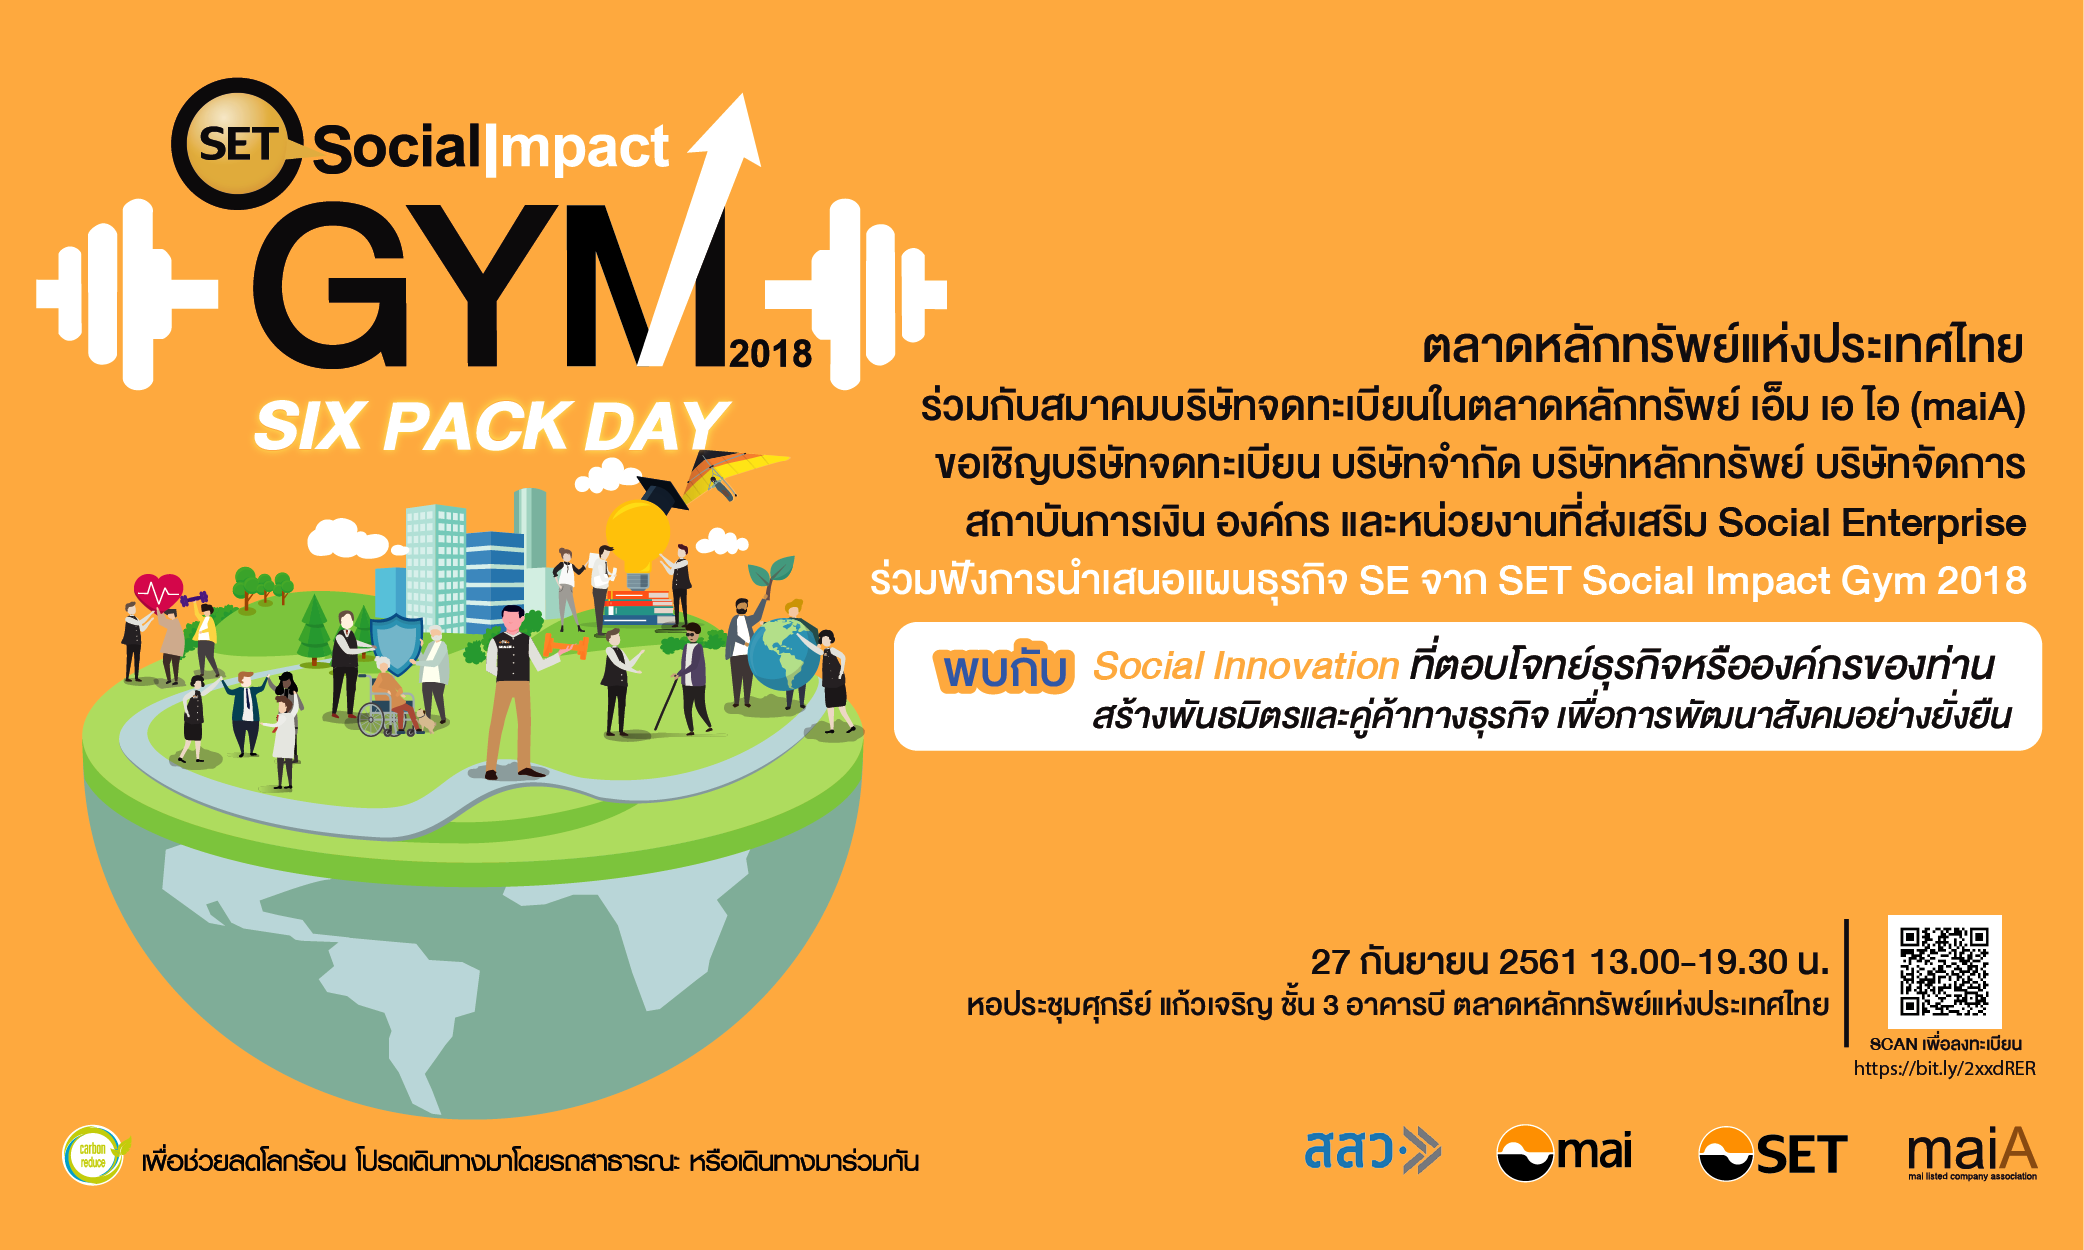 SET Social Impact Gym 2018 : Six Pack Day